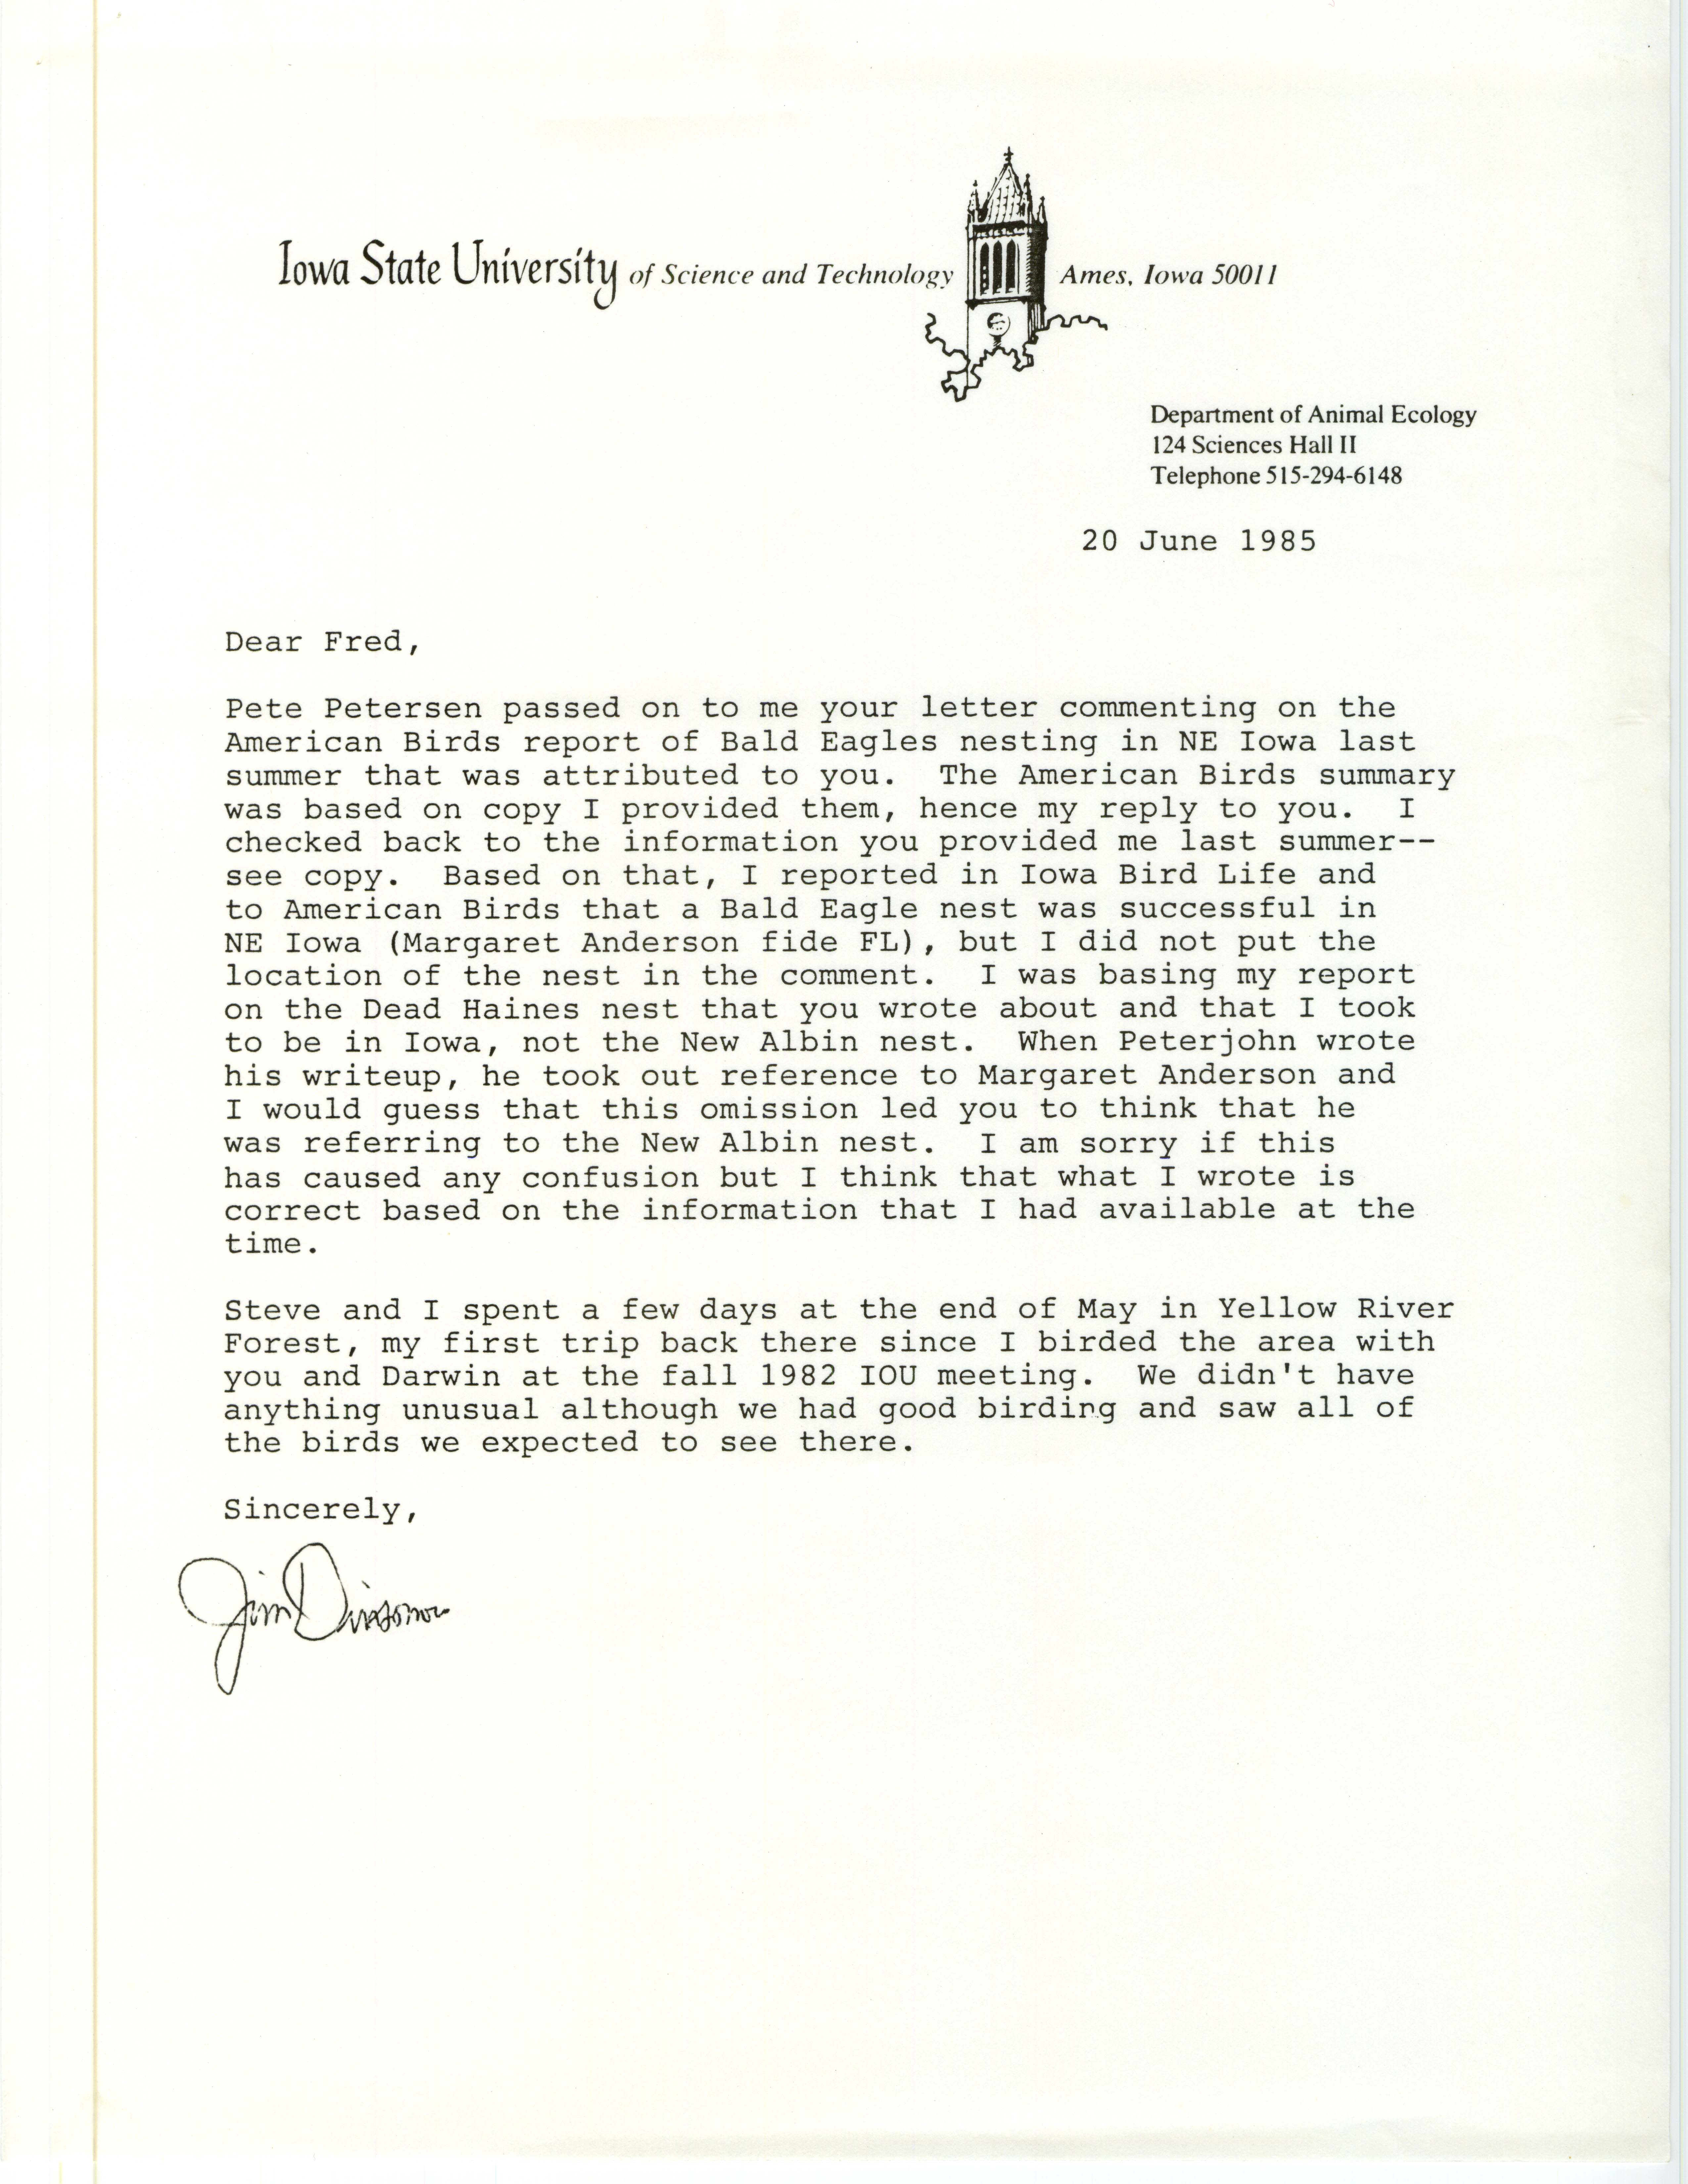 James J. Dinsmore letter to Fred Lesher regarding location of a Bald Eagle nest, June 20, 1985